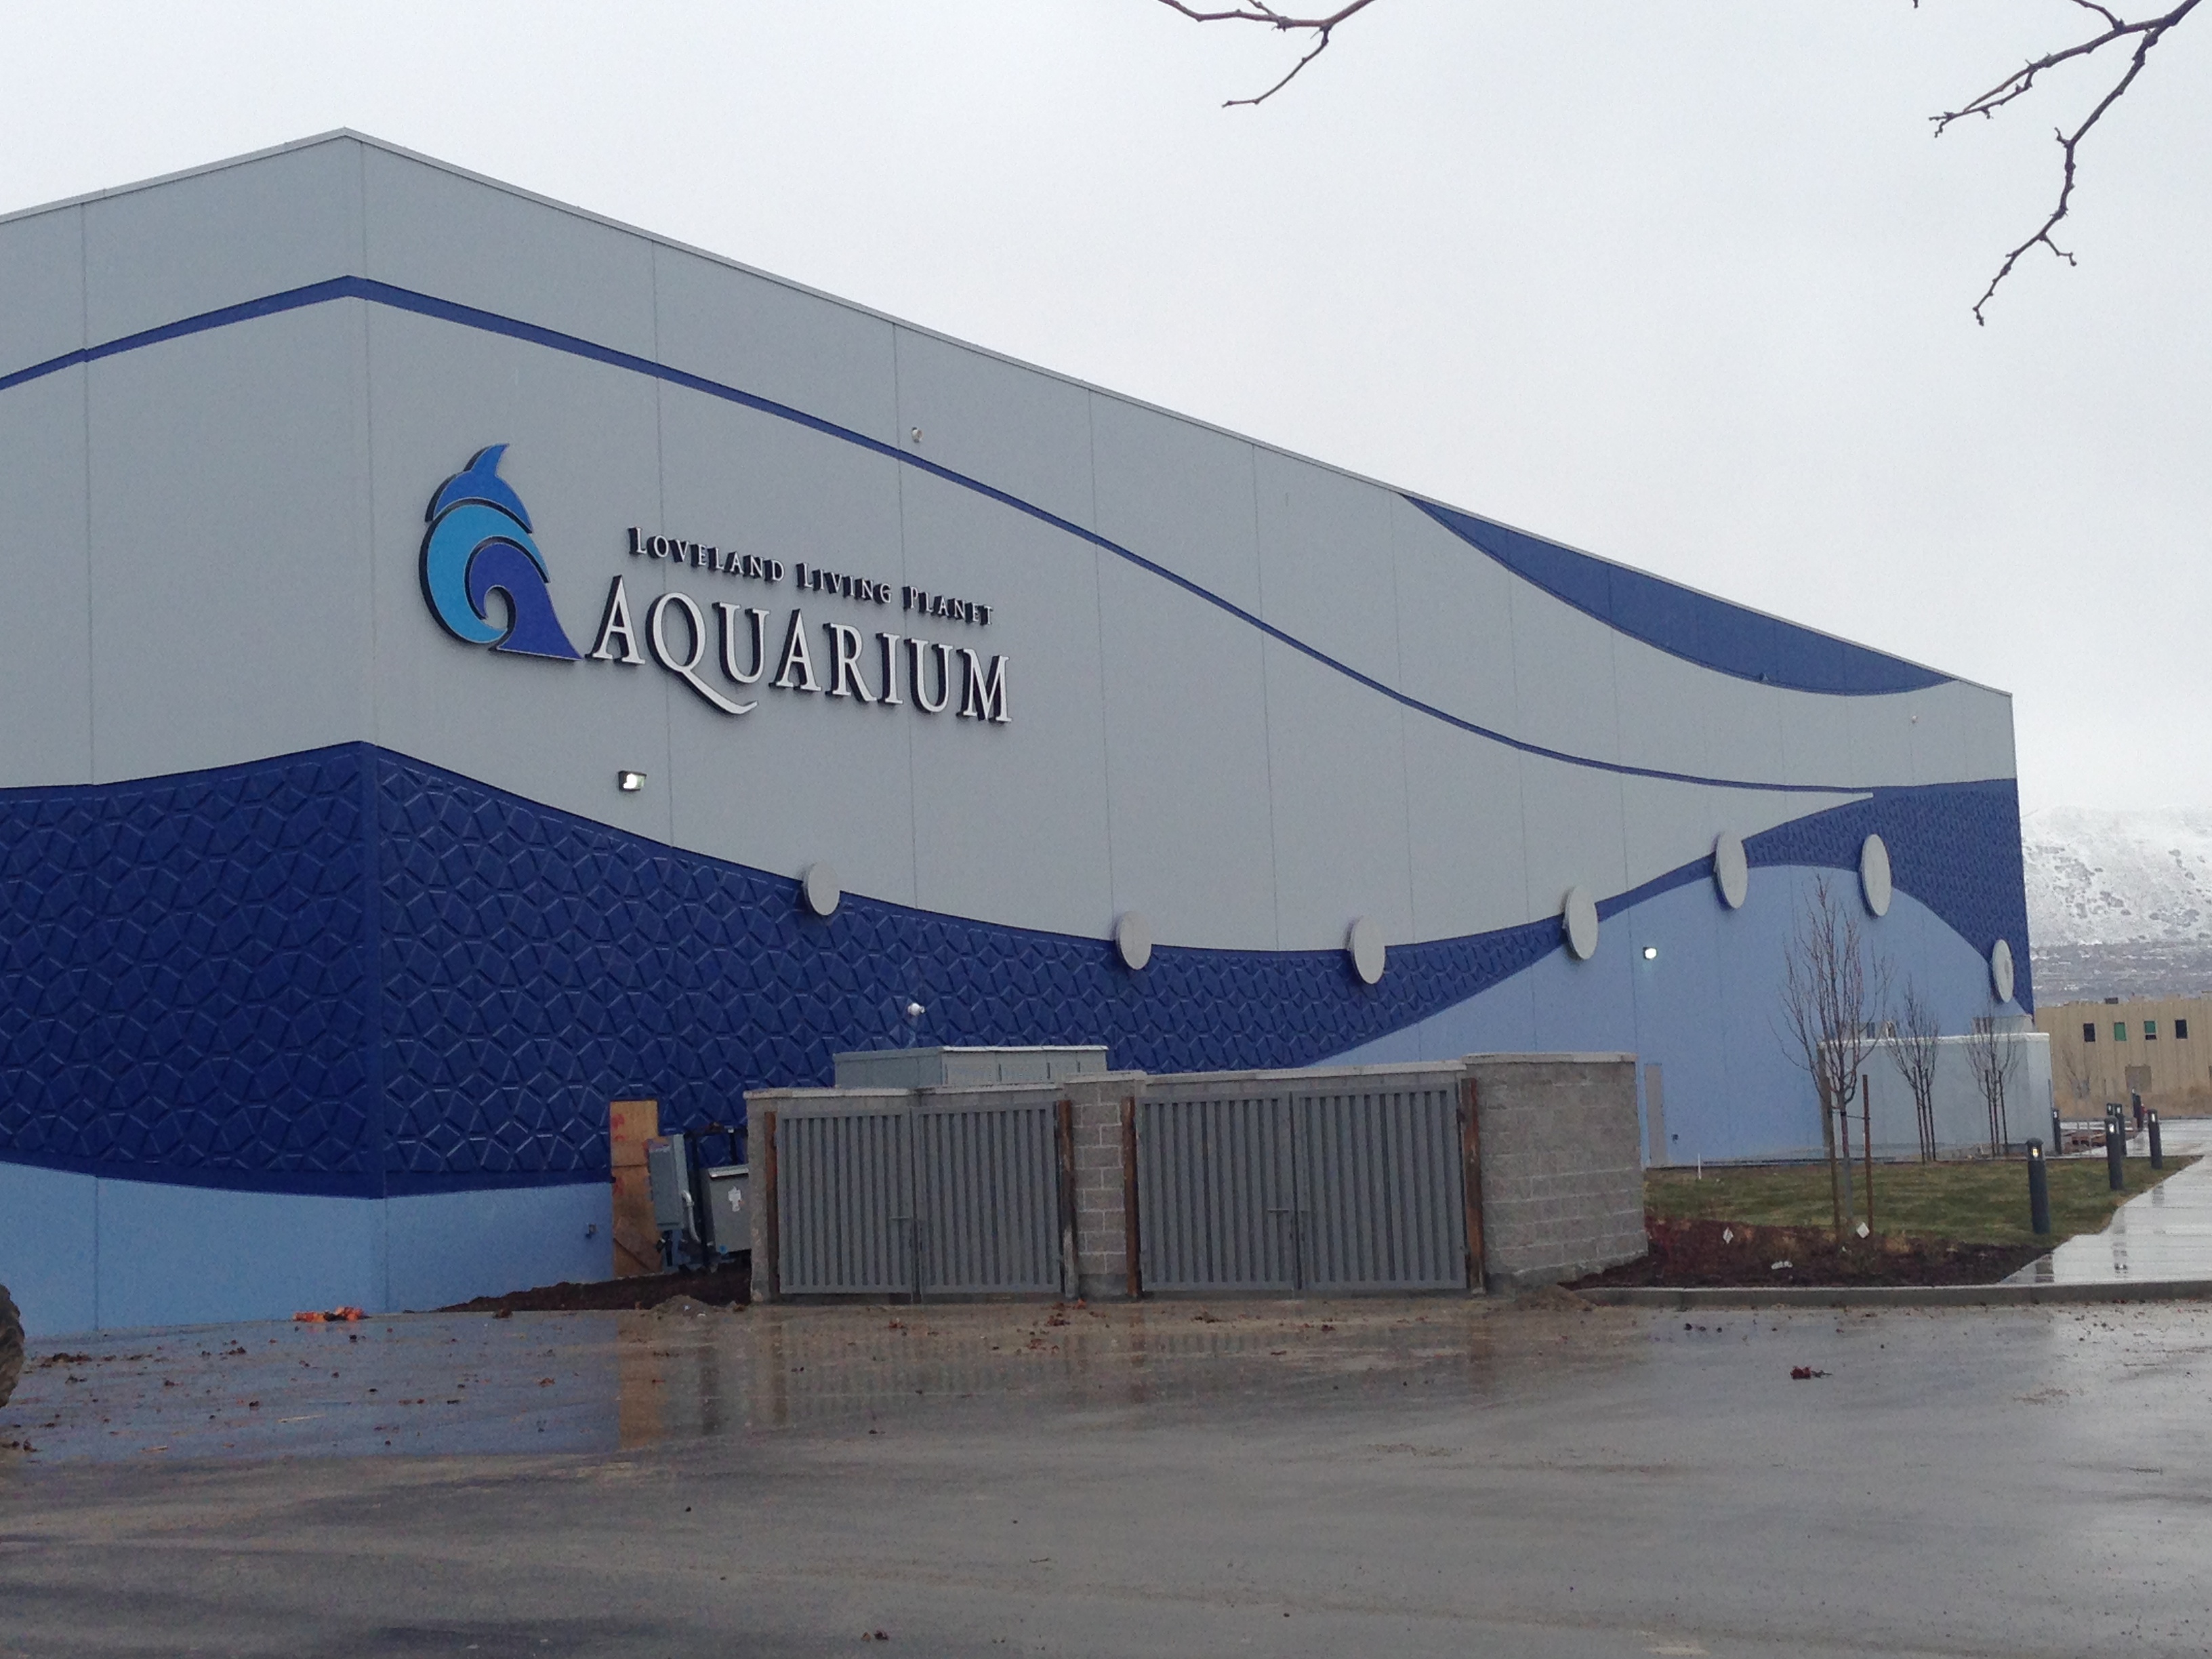 Loveland Living Planet Aquarium prepares for grand opening - The